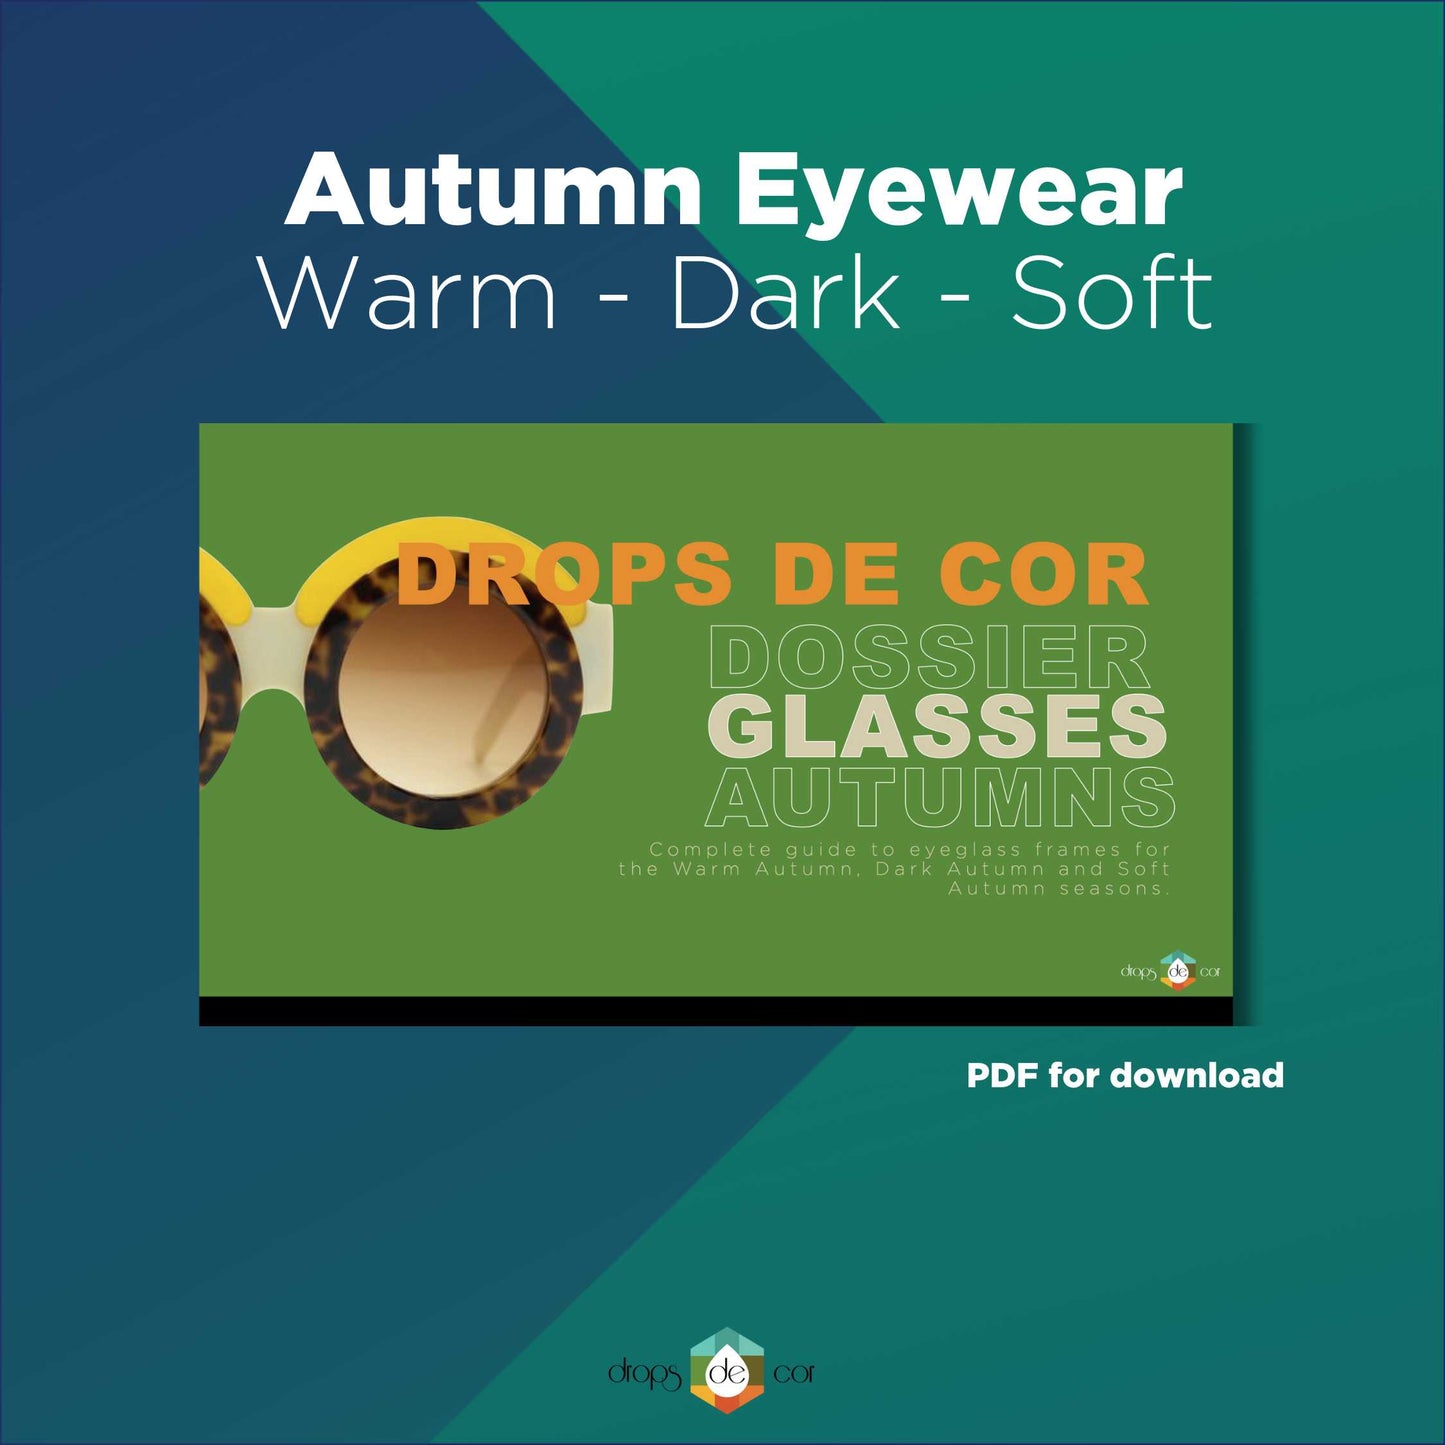 Autumn Eyewear Seasonal Dossier